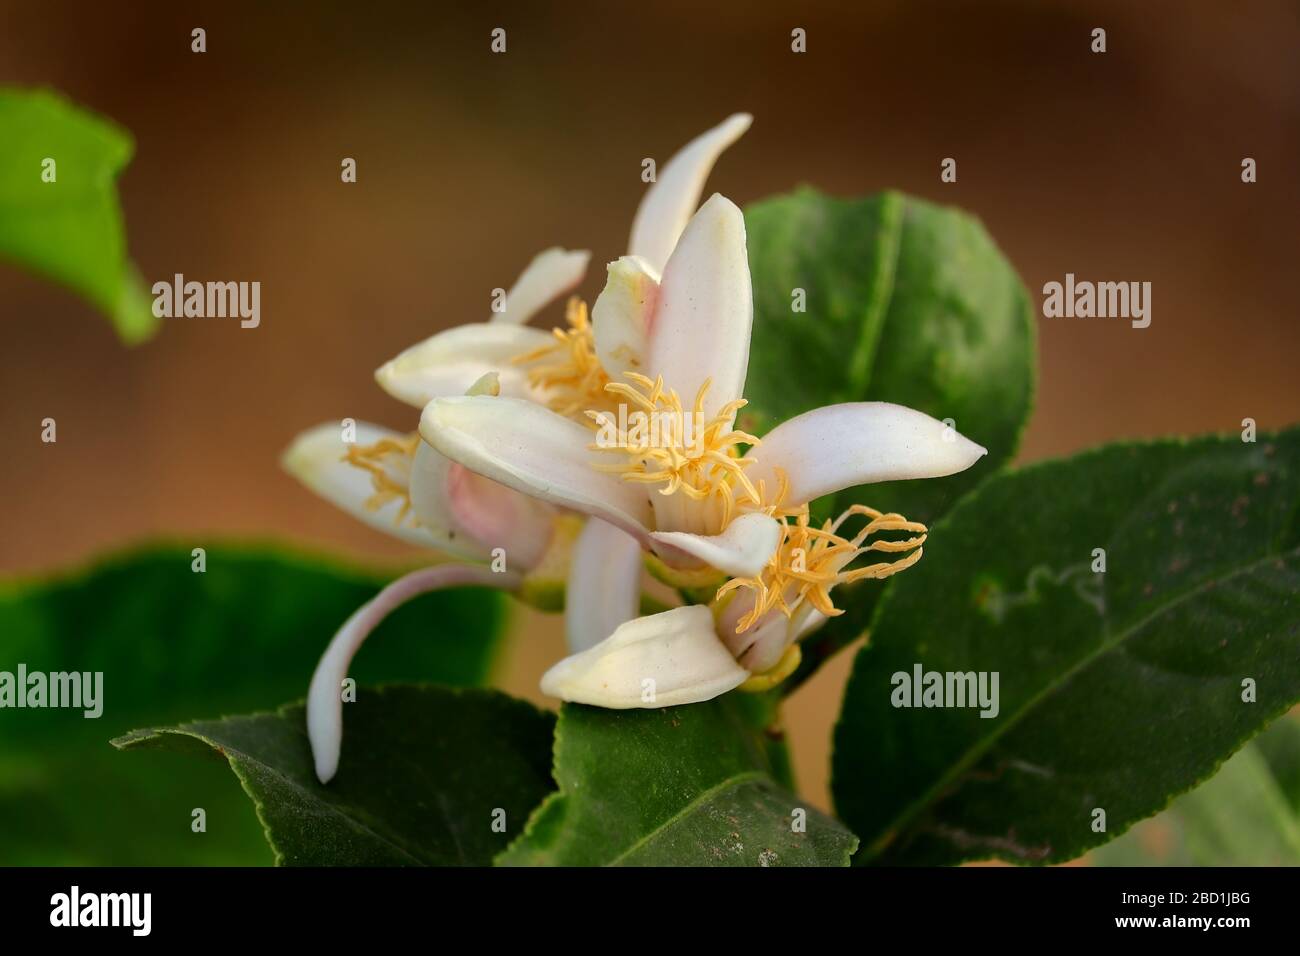 micro photography of white lemon flowers Stock Photo